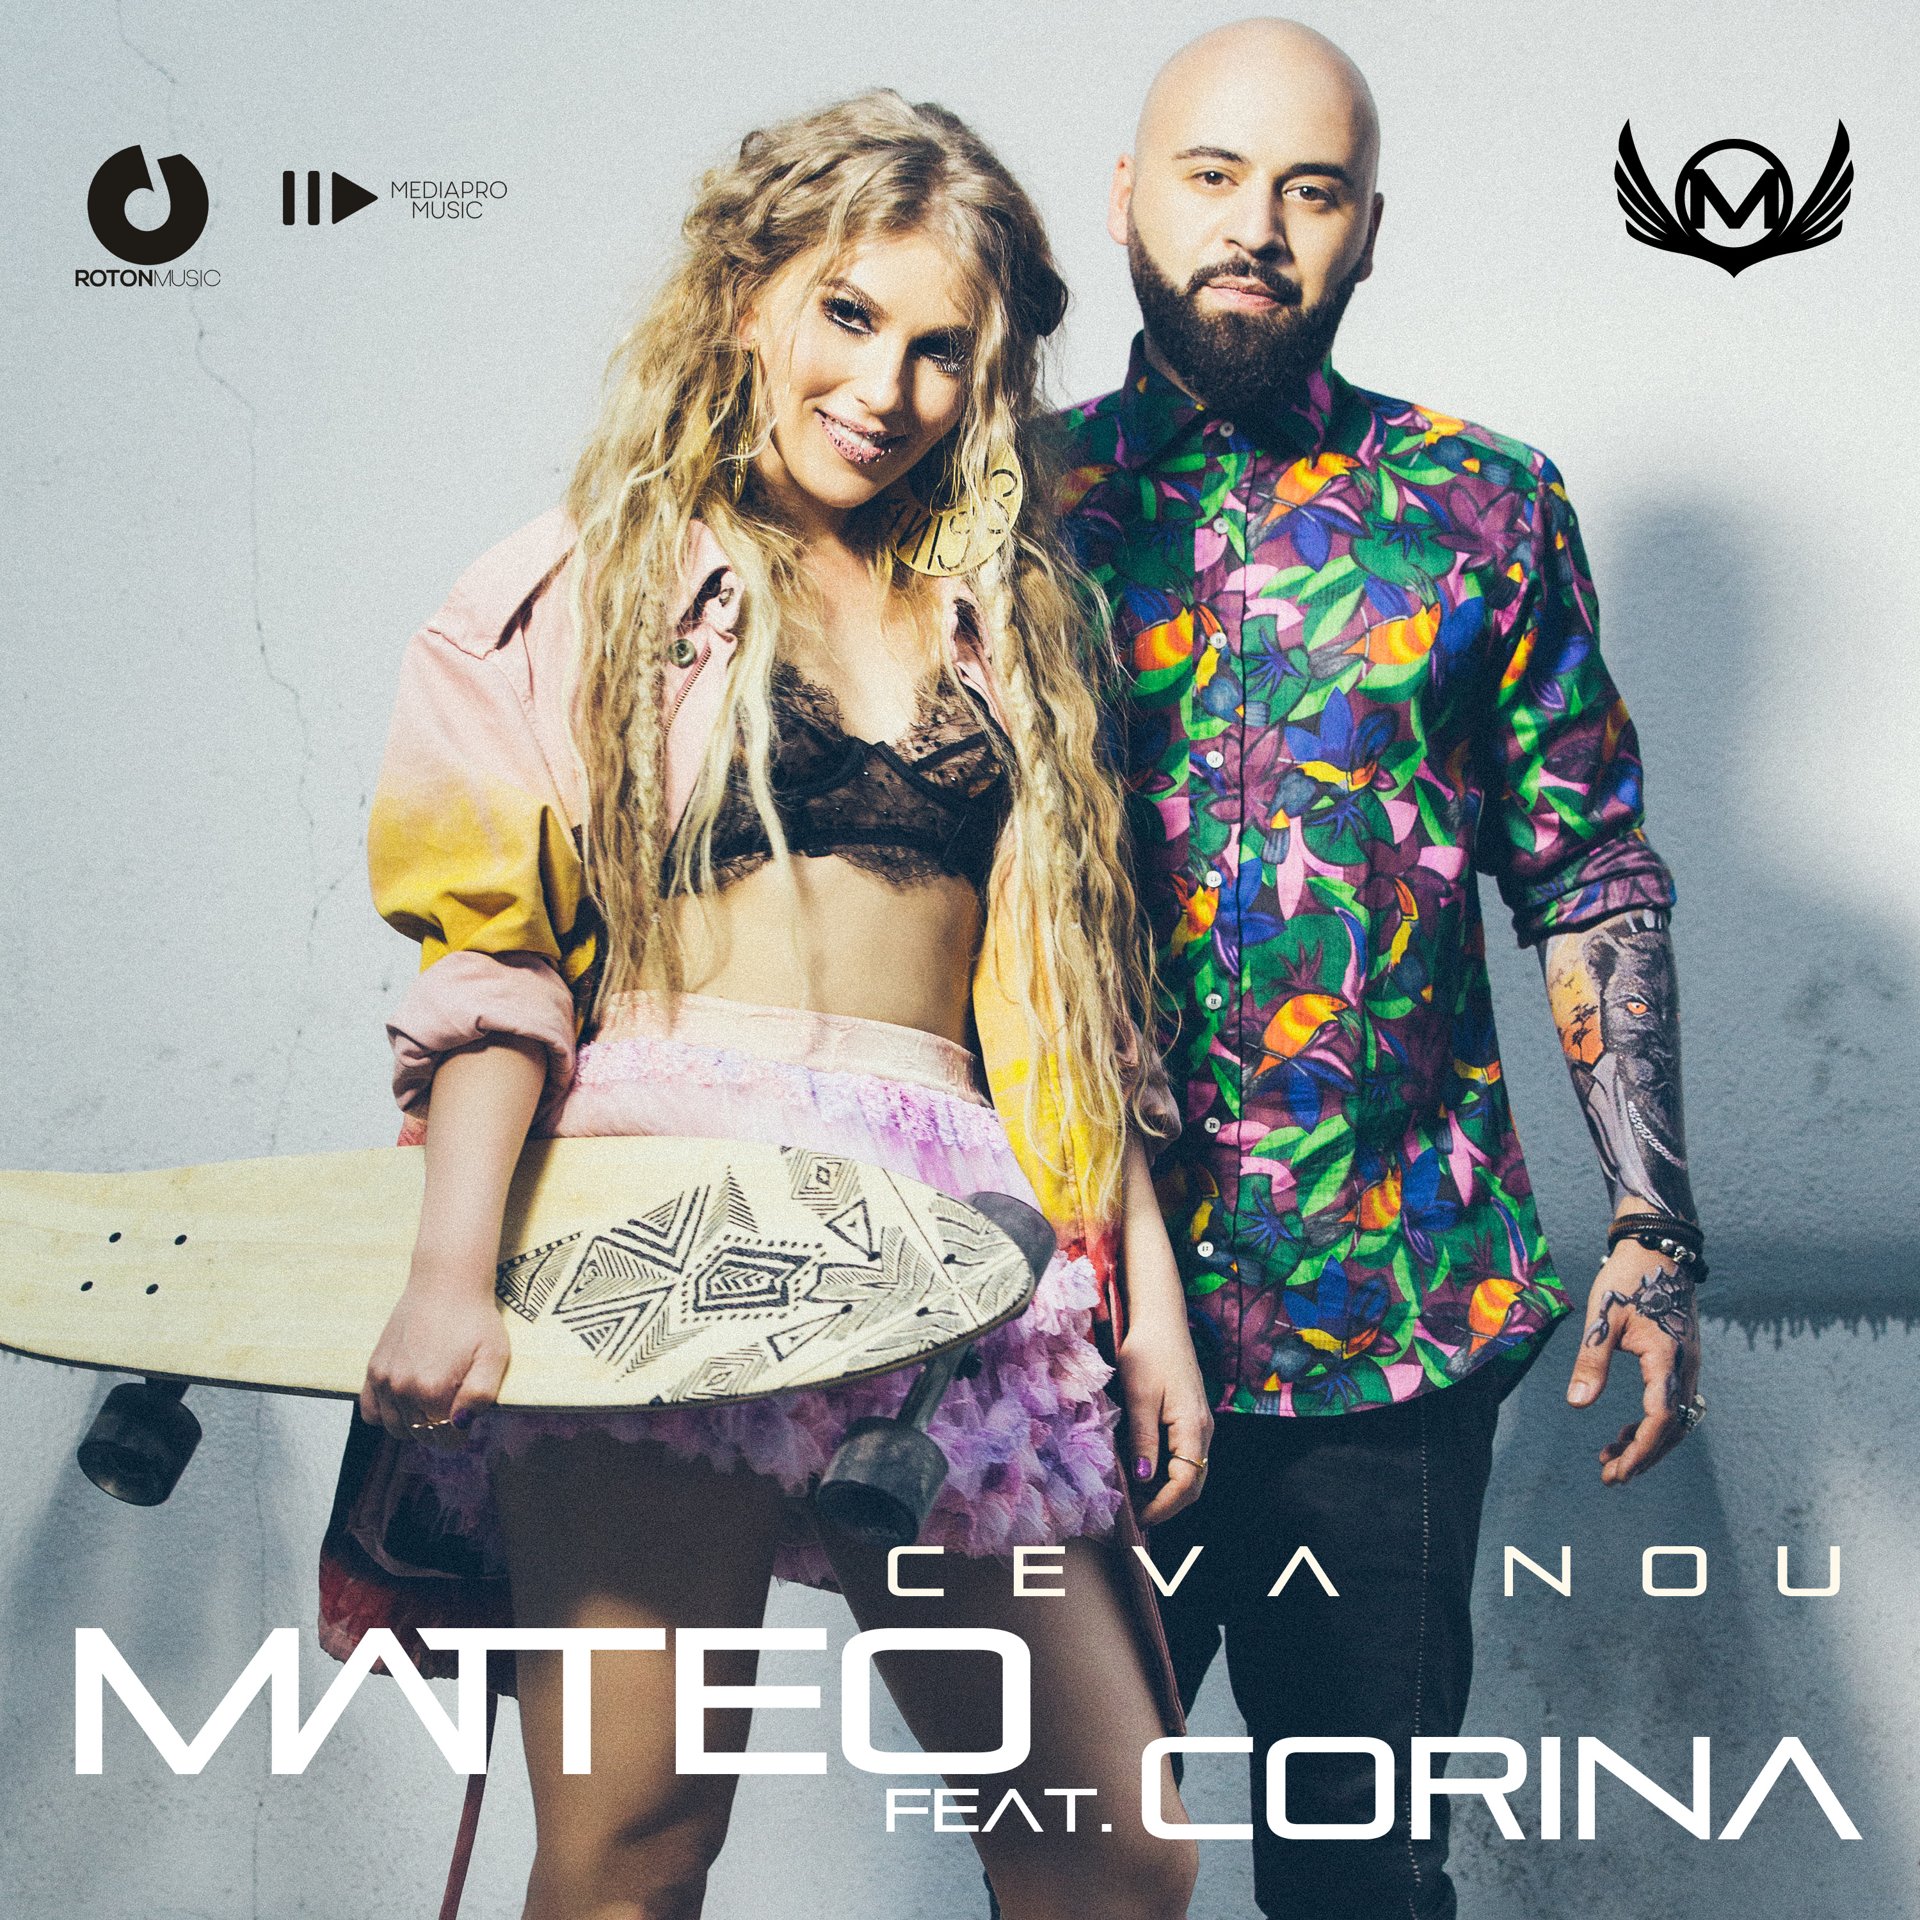 Matteo feat. Corina – Ceva nou (artwork)